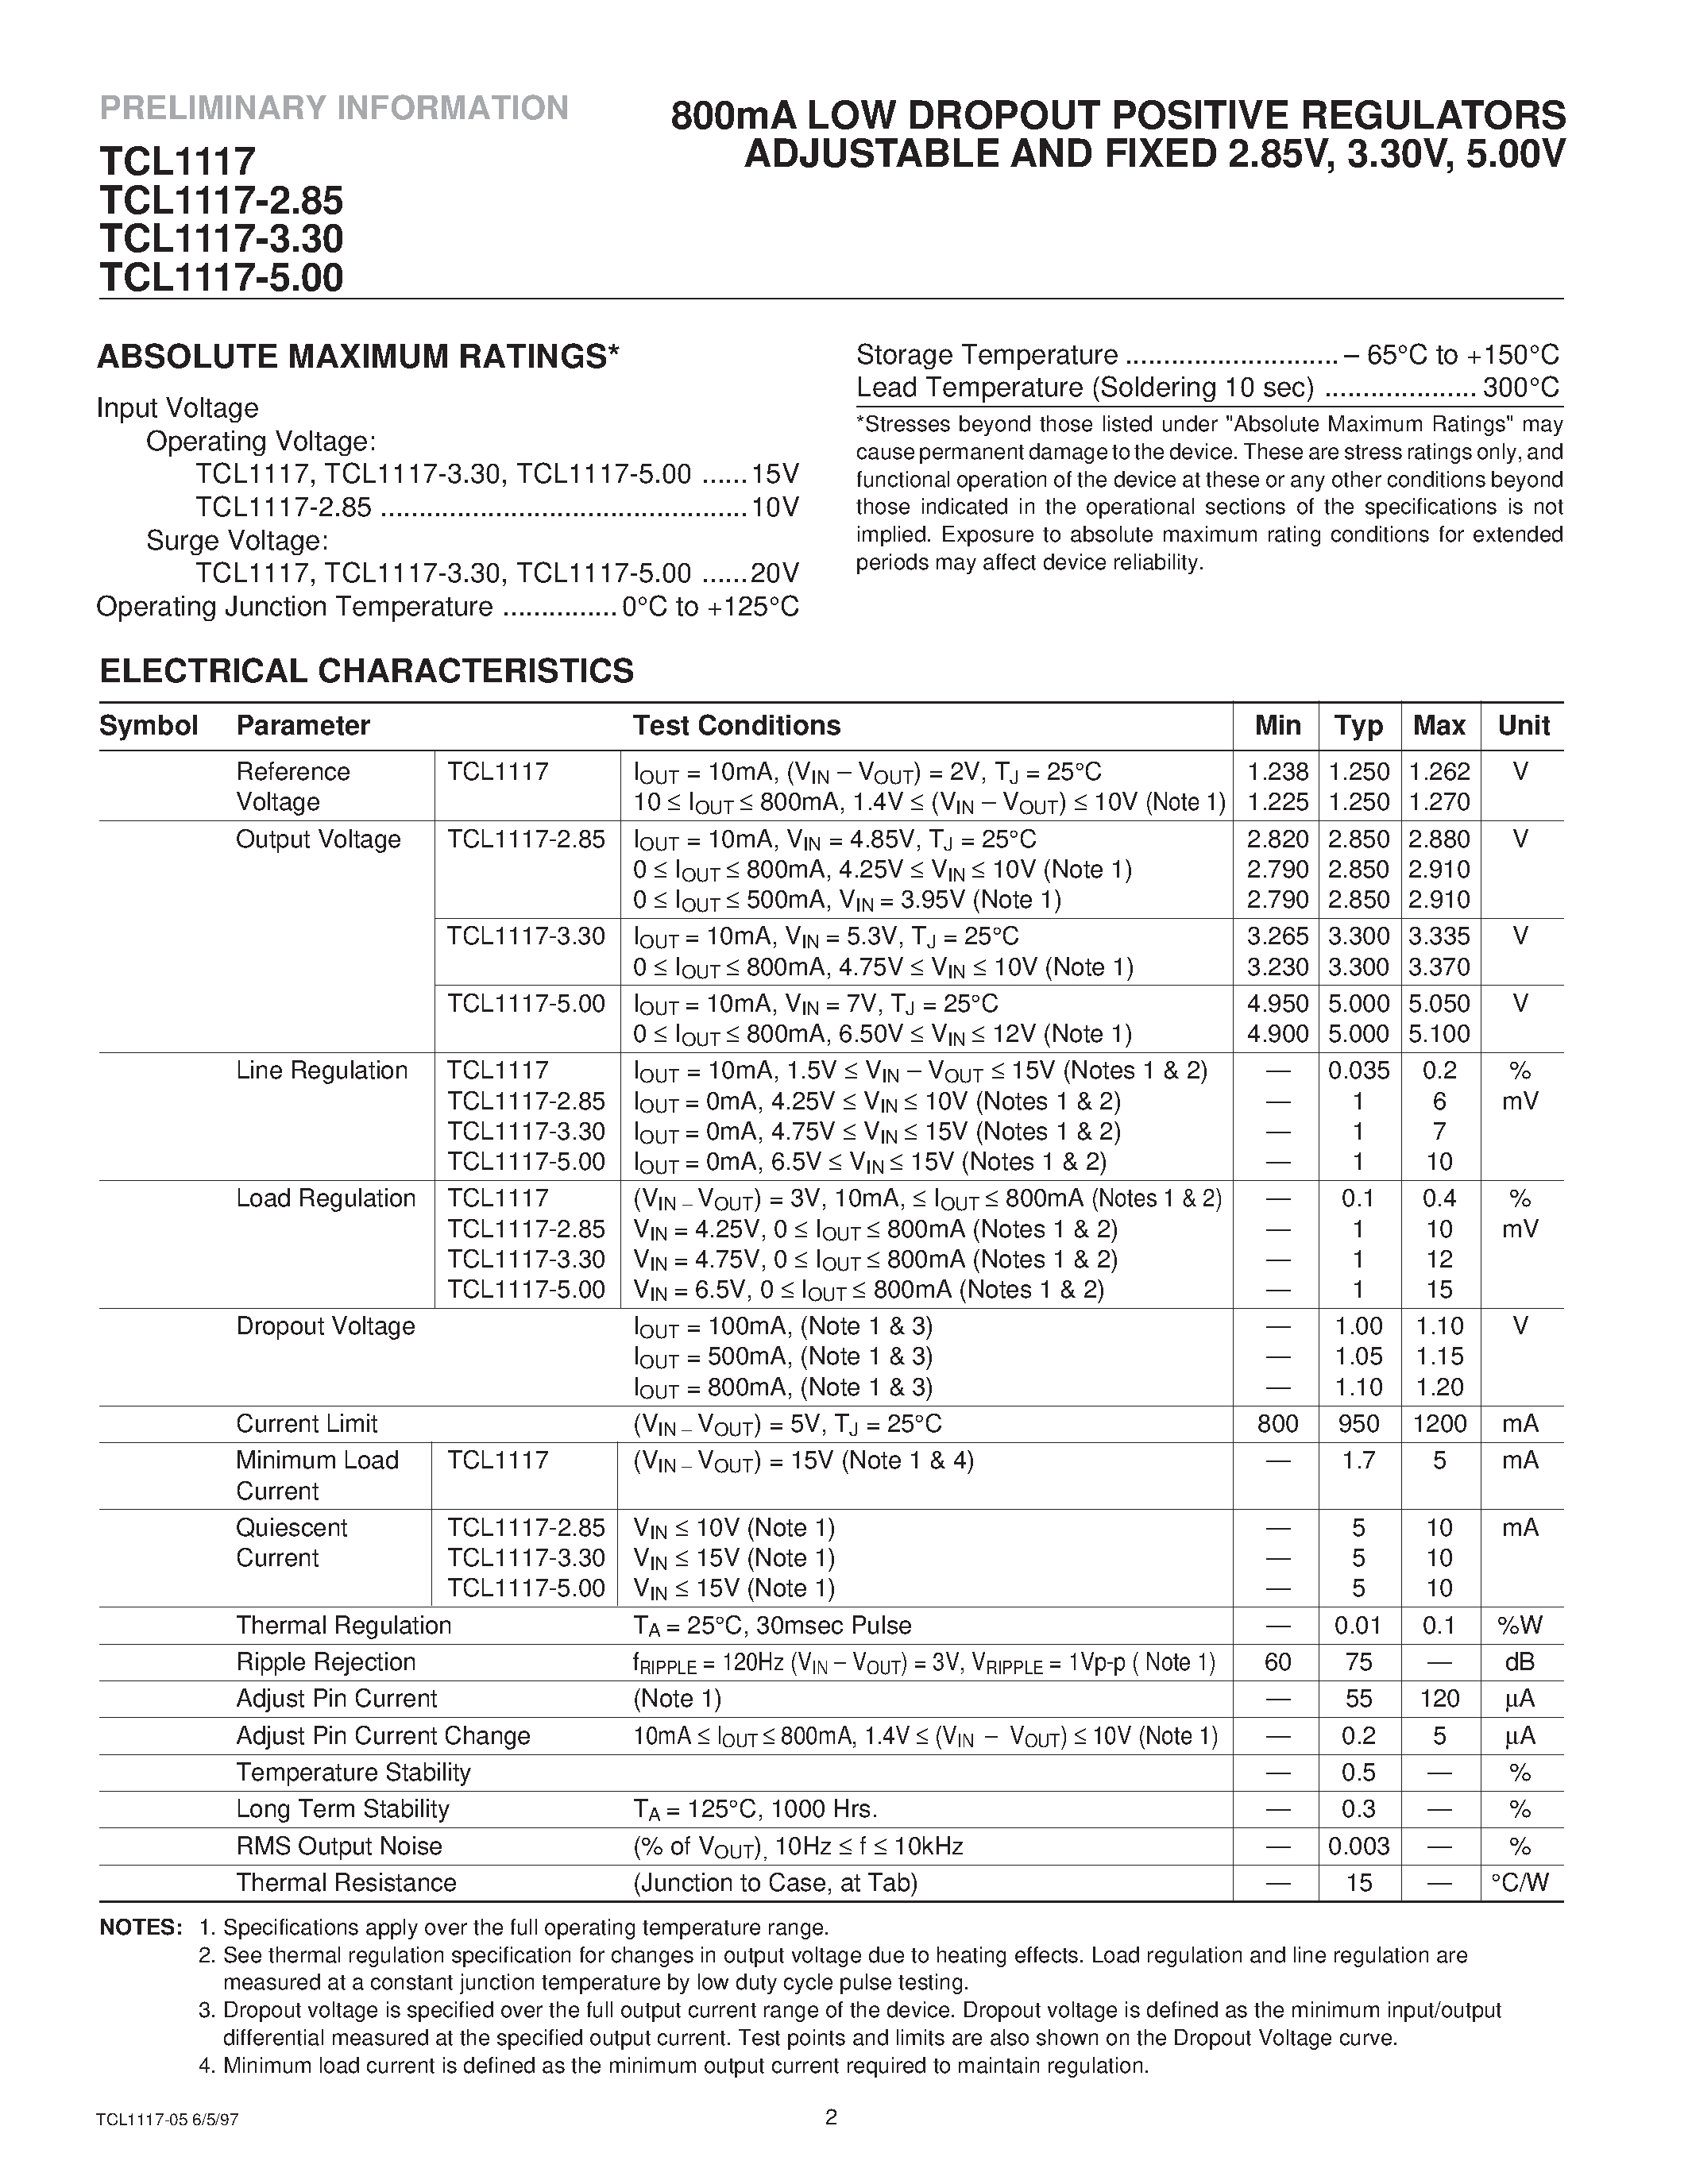 Datasheet TCL1117-5.00 - 800mA LOW DROPOUT POSITIVE REGULATORS ADJUSTABLE AND FIXED 2.85V/ 3.30V/ 5.00V page 2